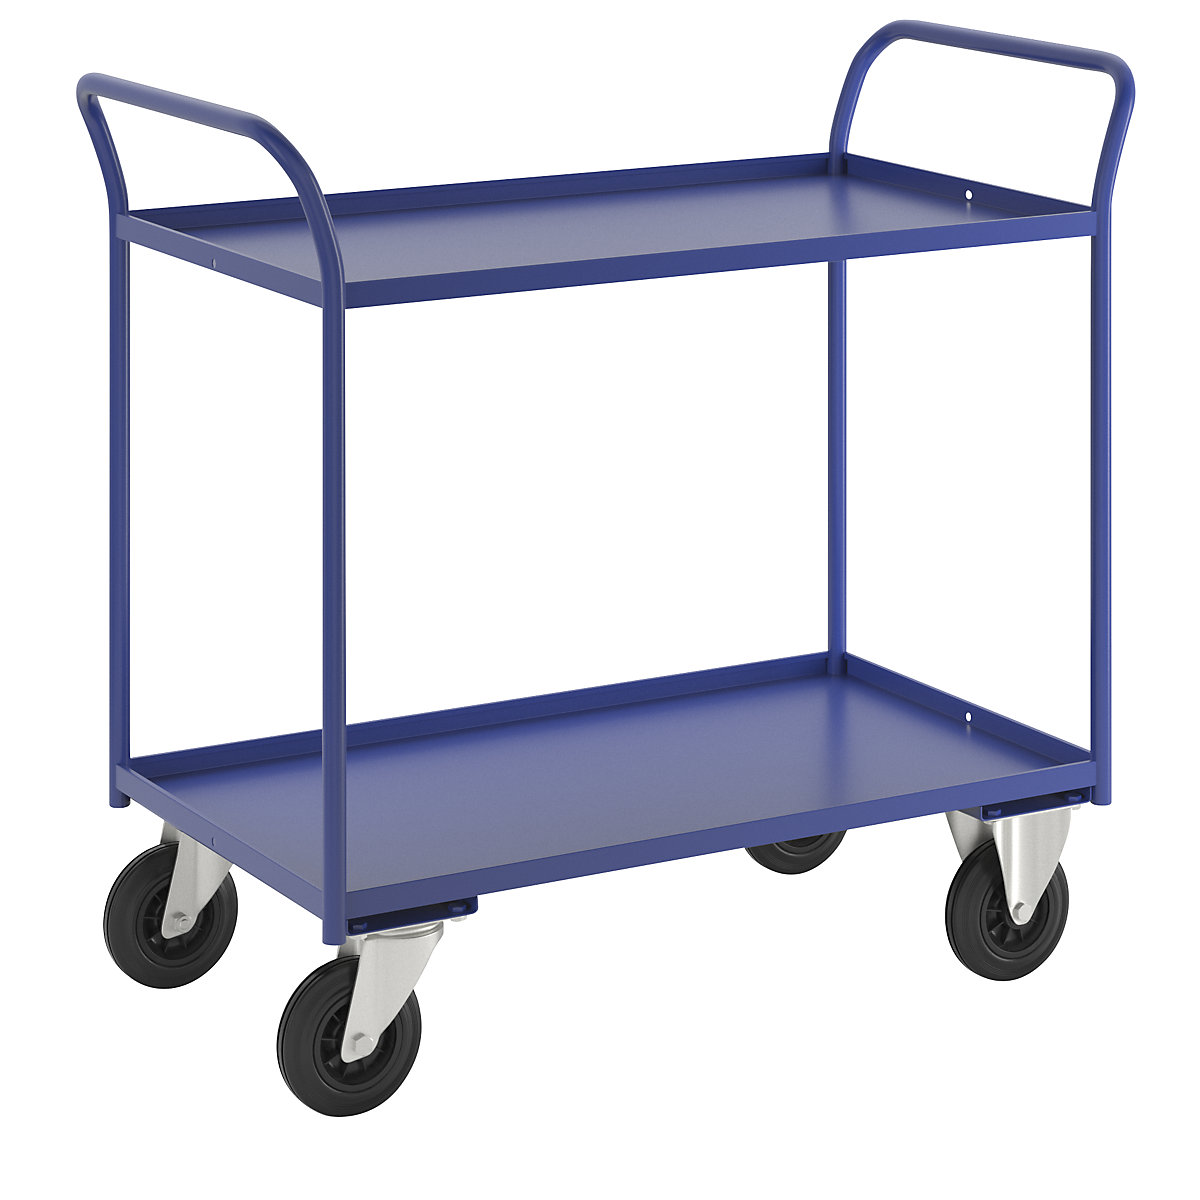 KM41 table trolley – Kongamek, 2 shelves with raised edges, LxWxH 1070 x 550 x 1000 mm, blue, 2 swivel castors and 2 fixed castors-8